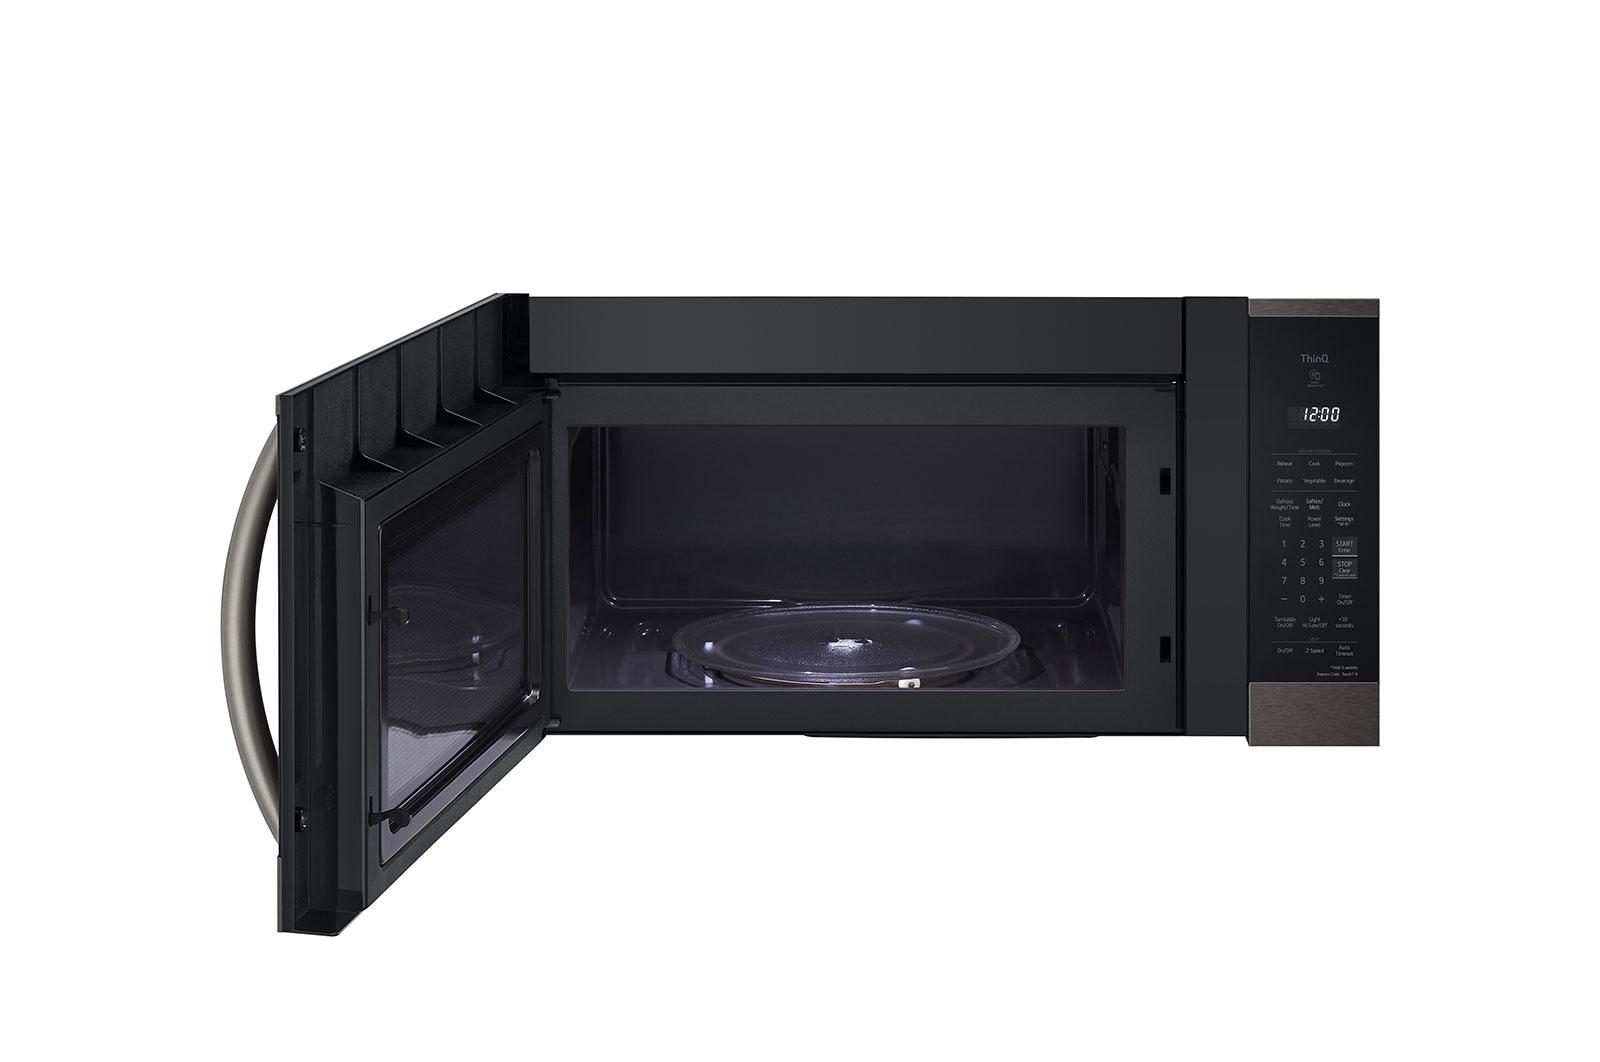 Lg 1.8 cu. ft. Smart Over-the-Range Microwave